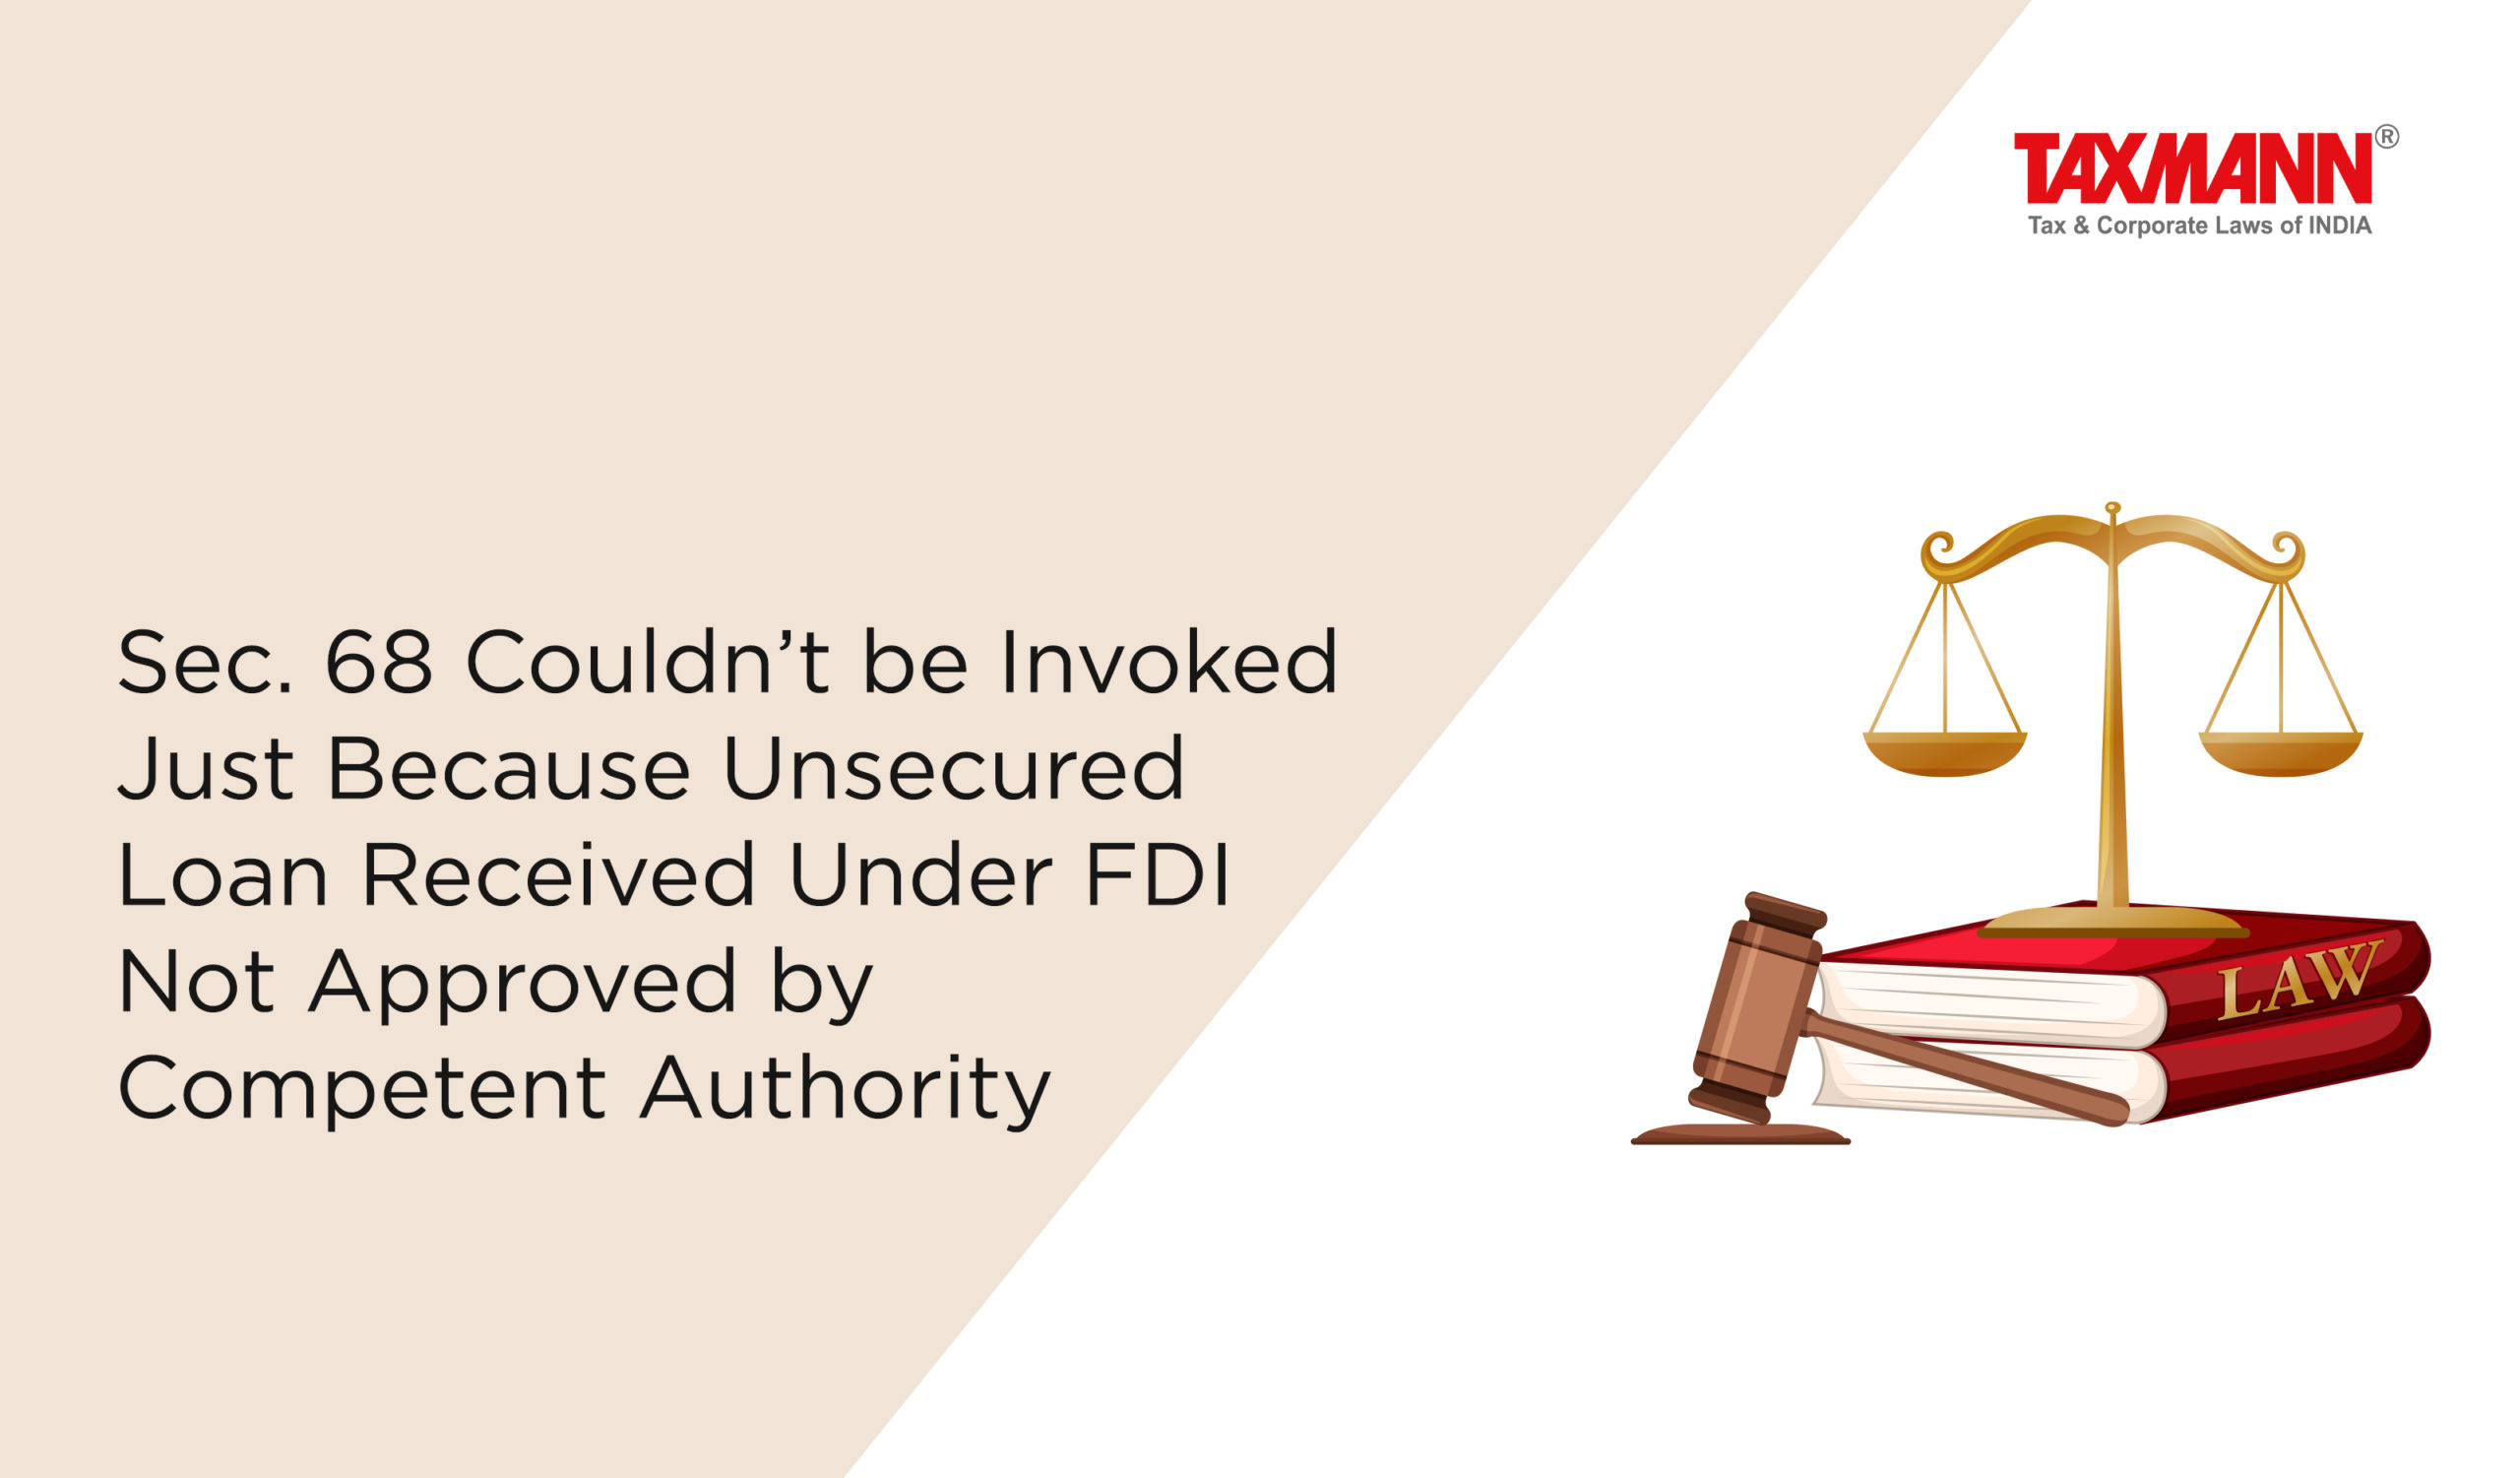 Unsecured loan under FDI